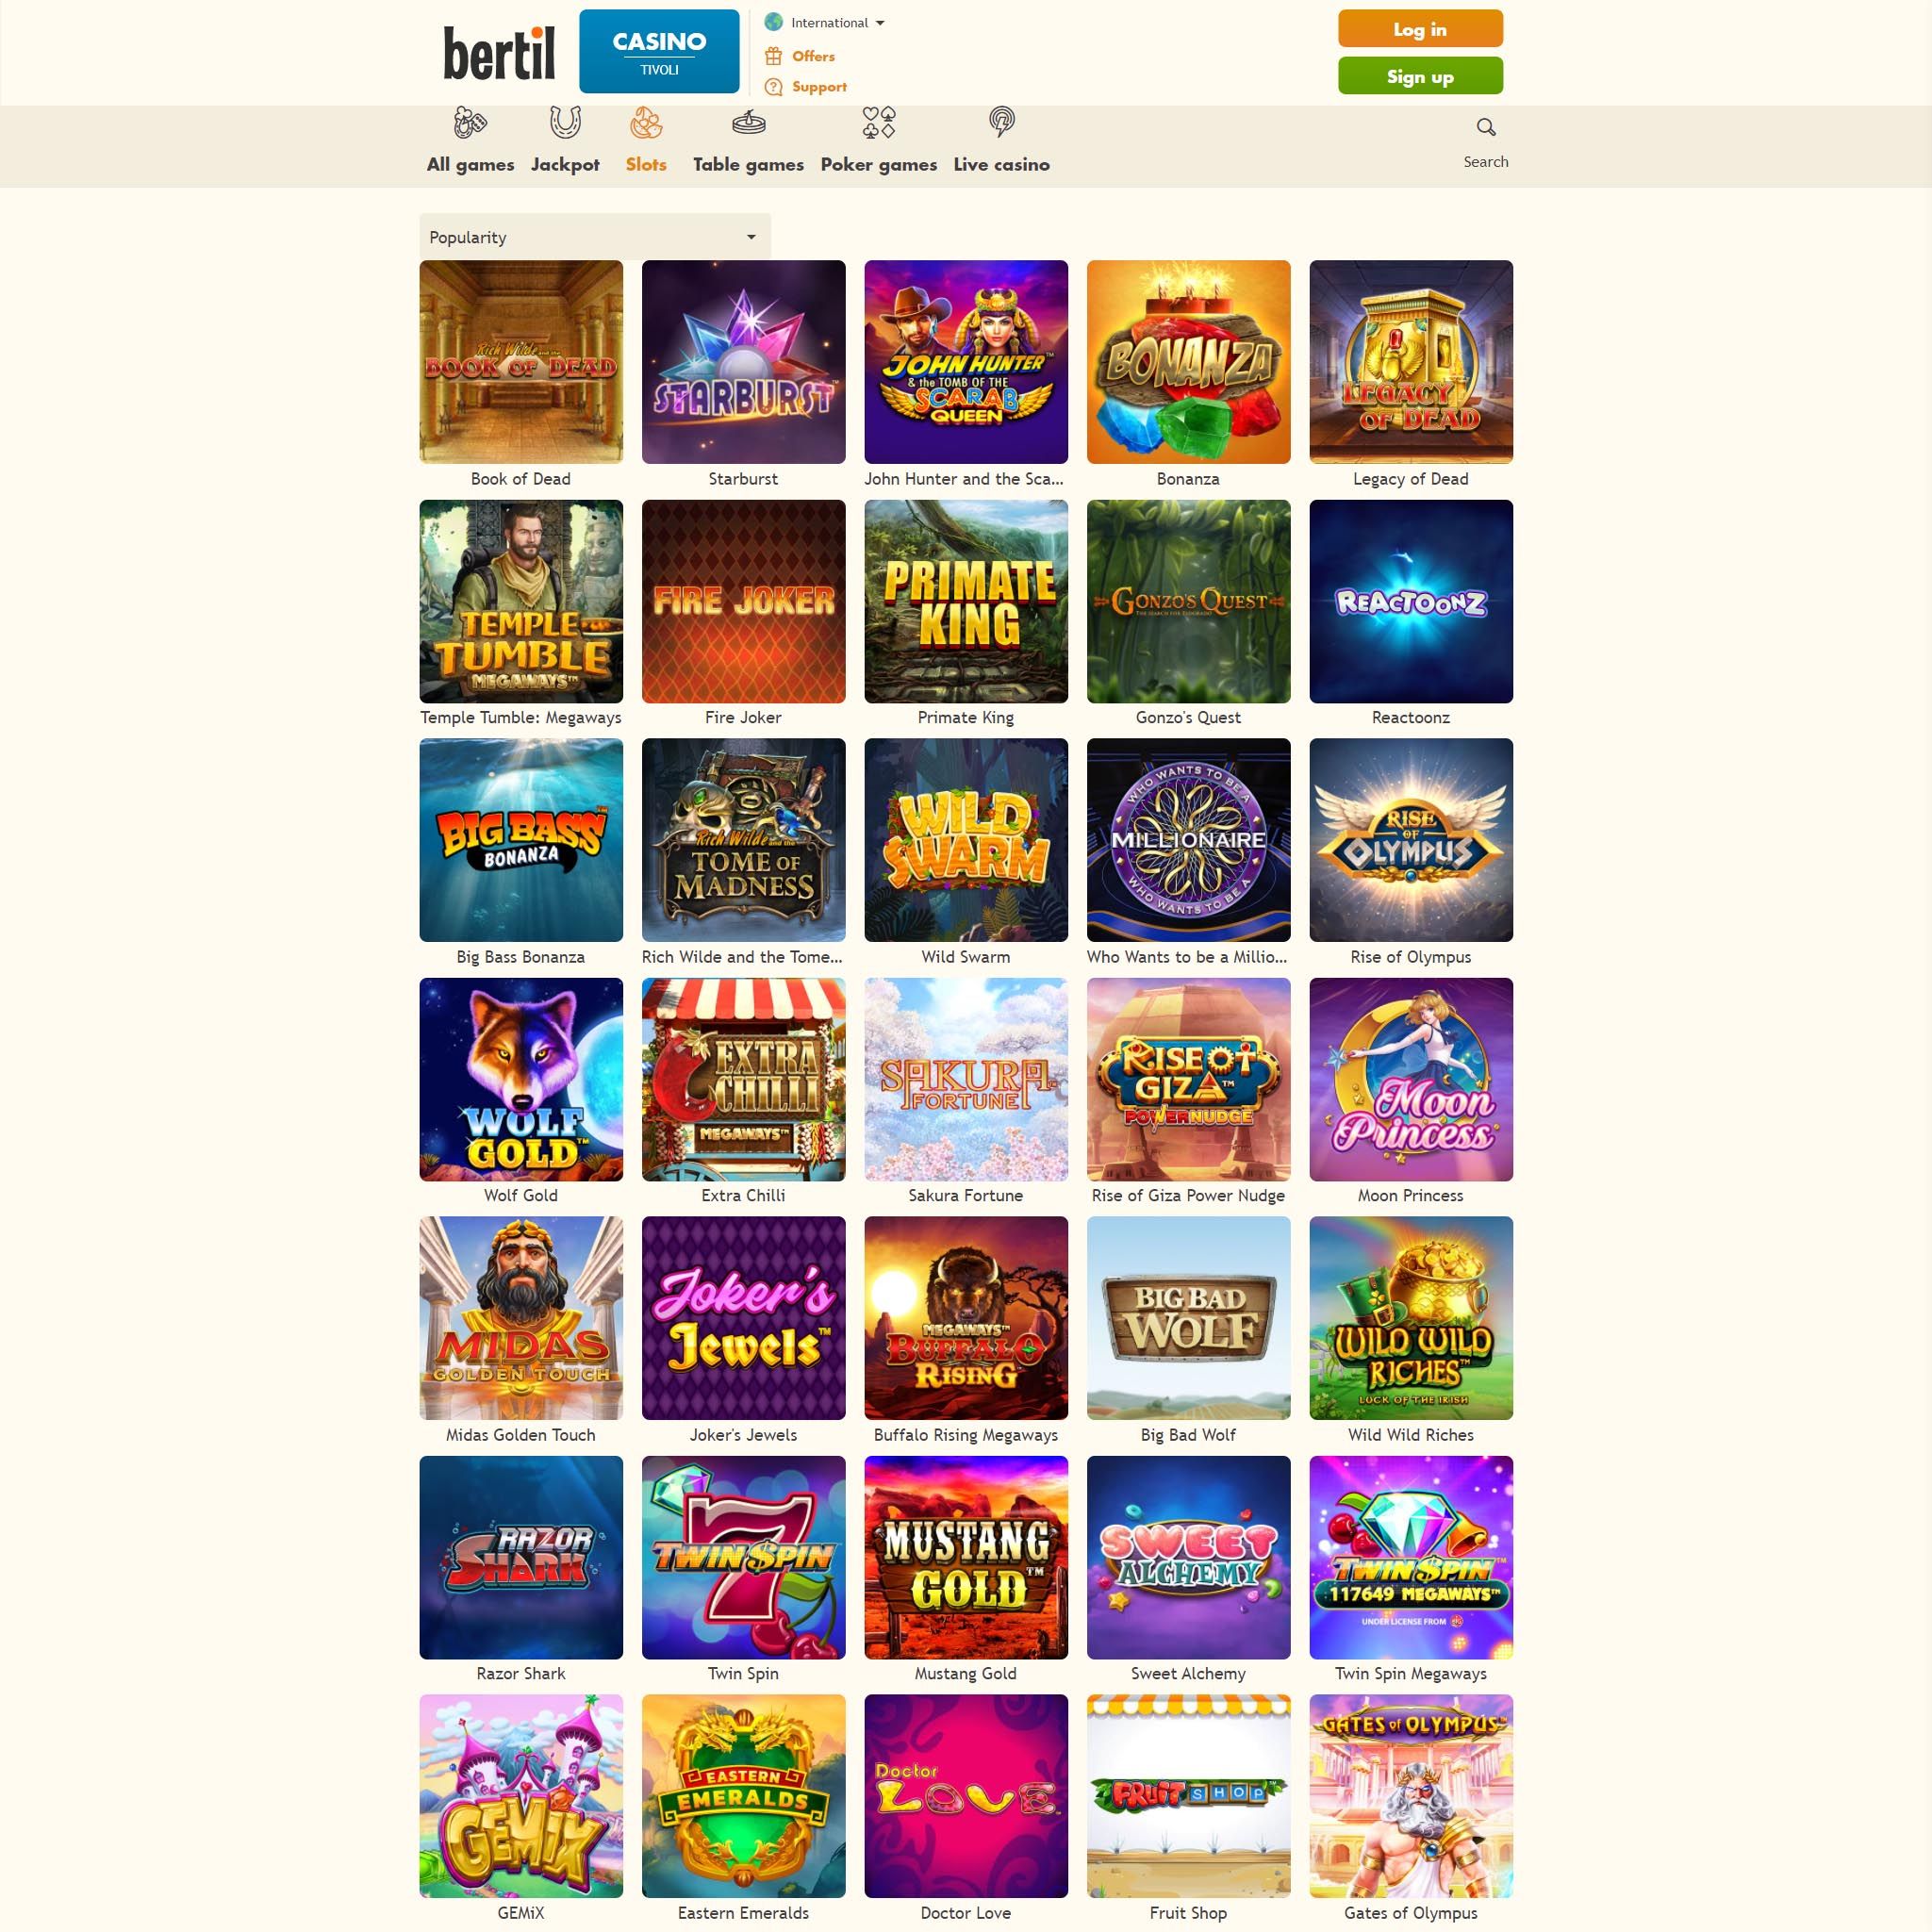 Bertil full games catalogue